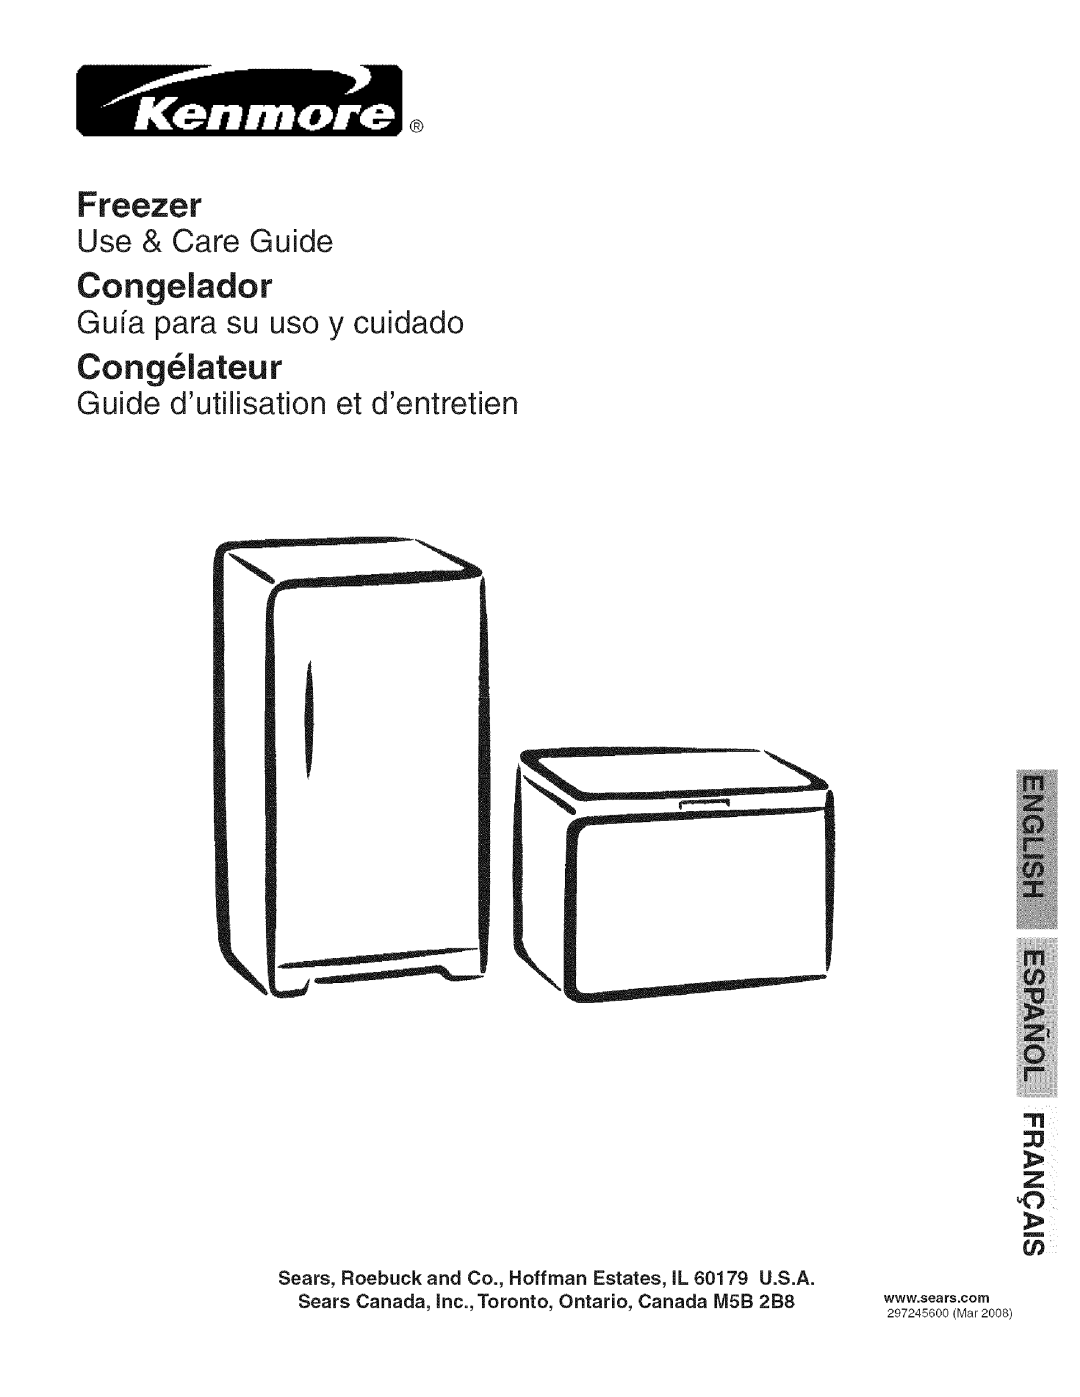 Kenmore 25328452805 manual Freezer, Congelador, Cong_lateur, Guide dutilisationet dentretien, Use & Care Guide 